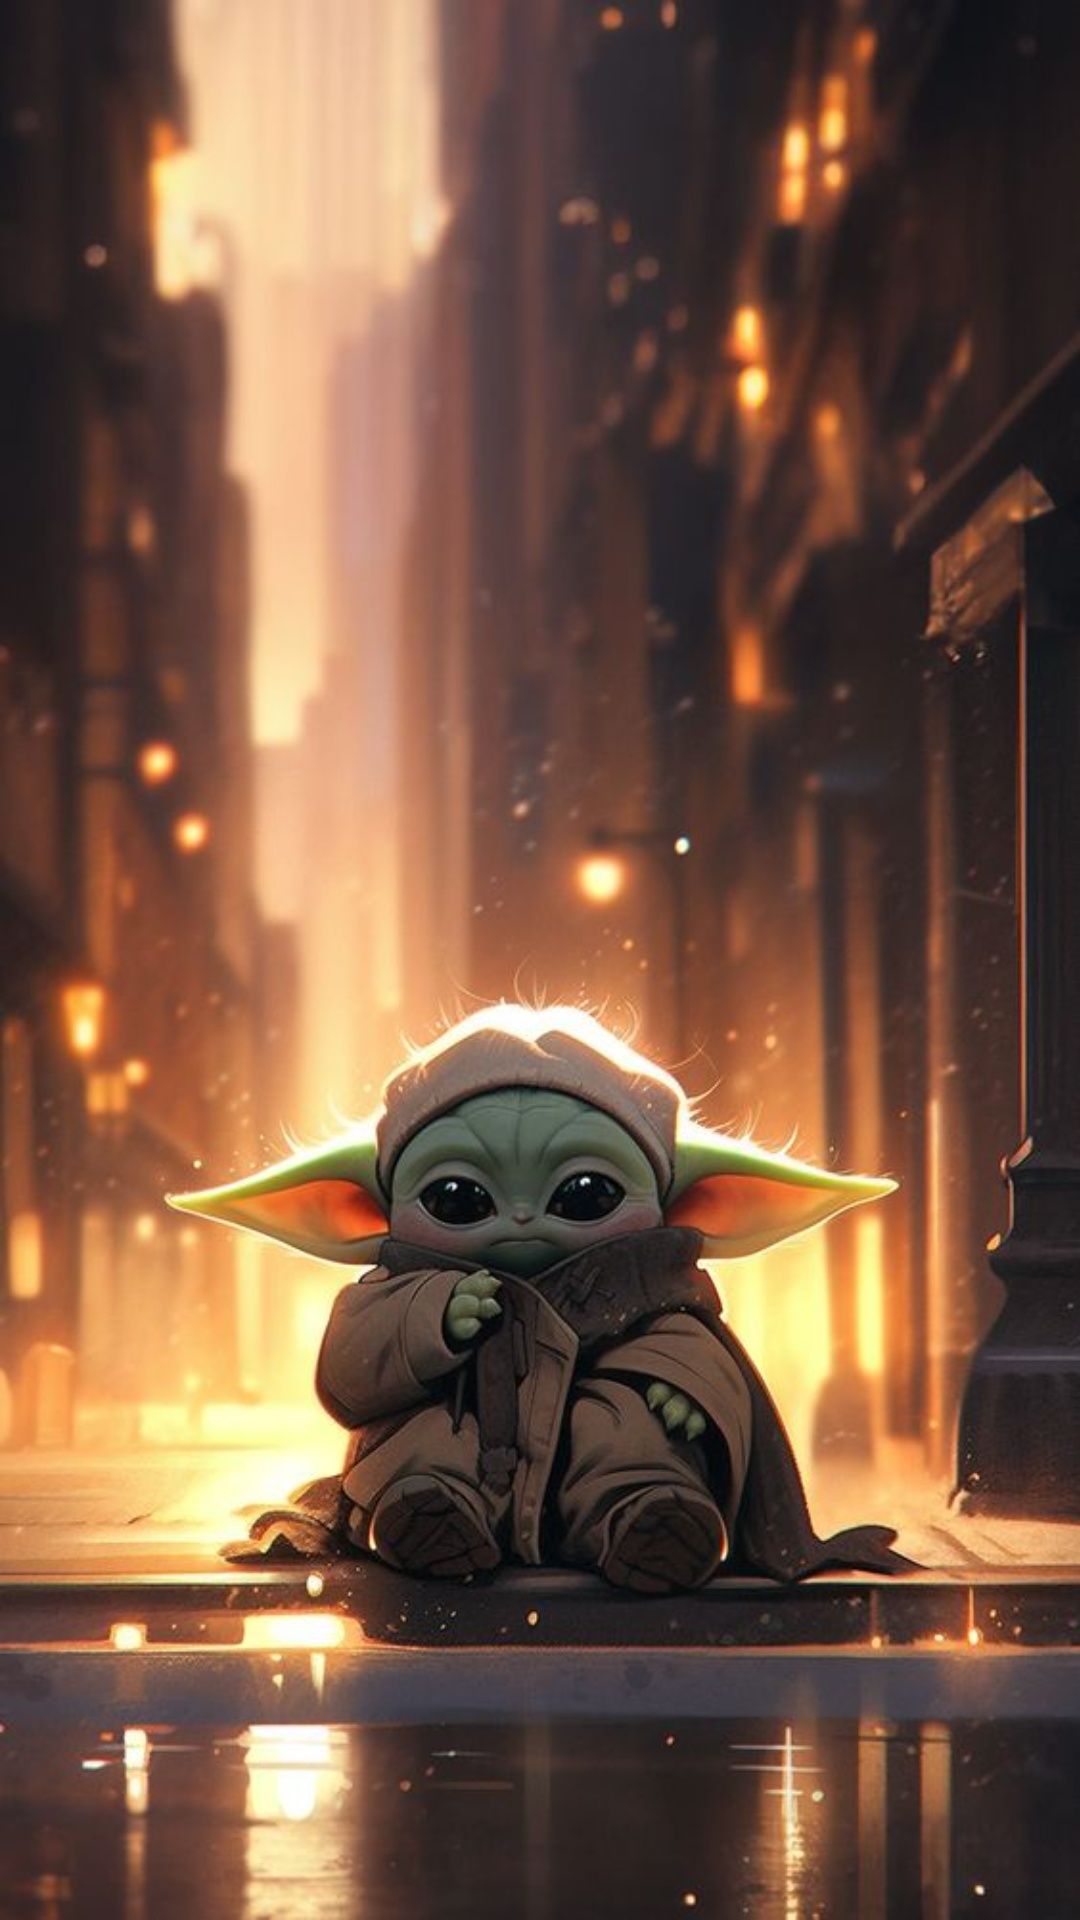 Baby yoda the child wallpaper for phone - Baby Yoda